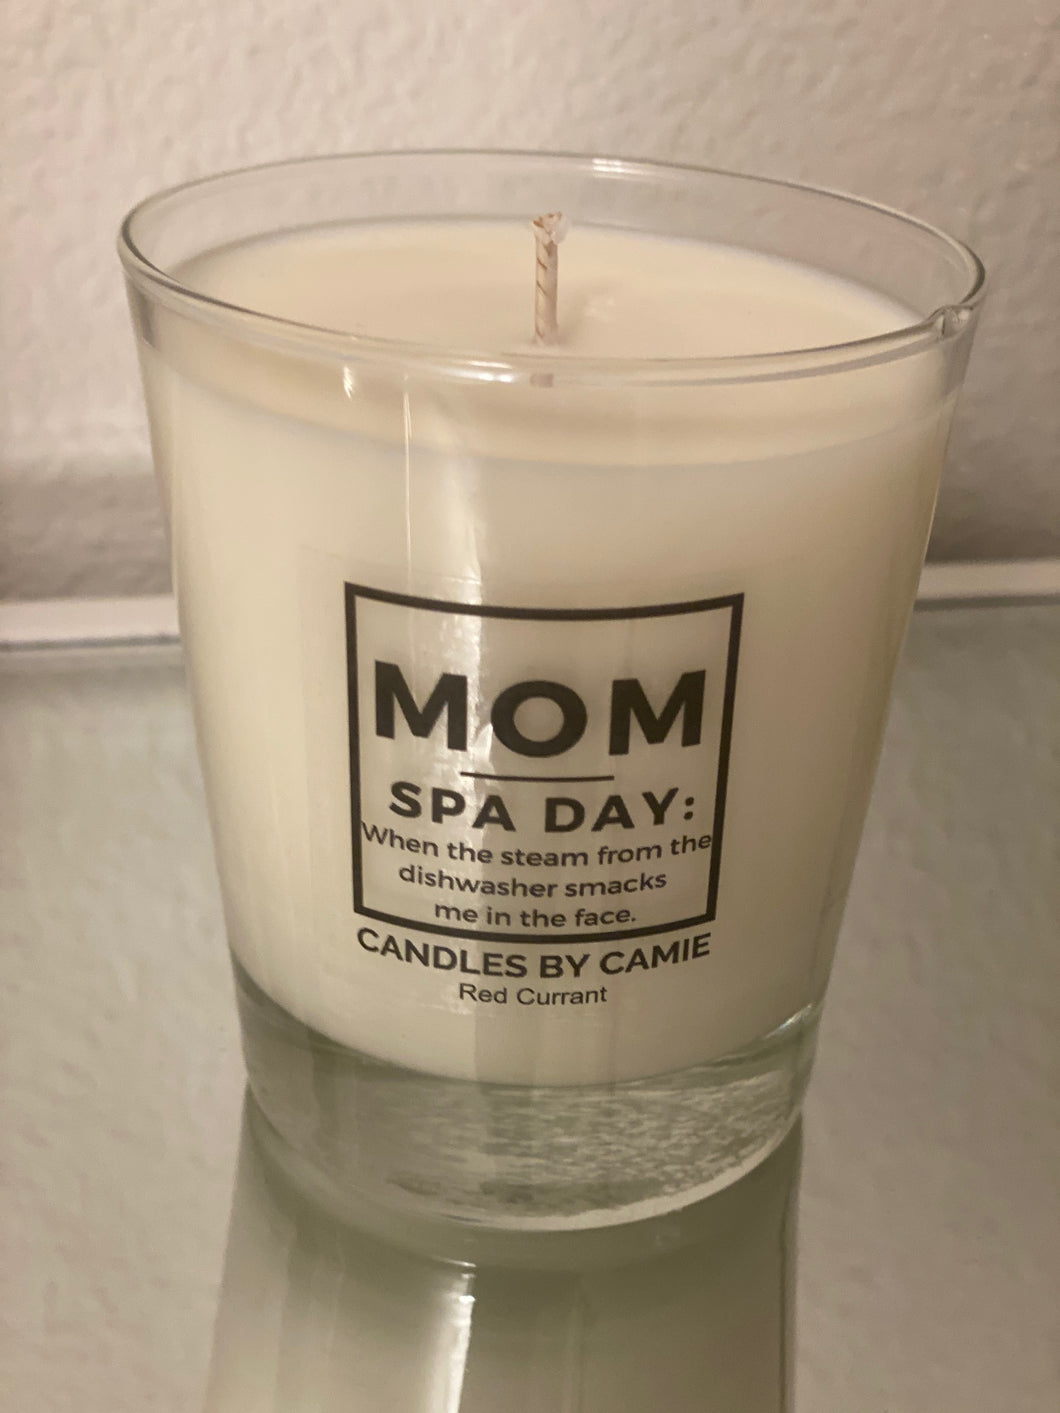 Mom - Spa Day